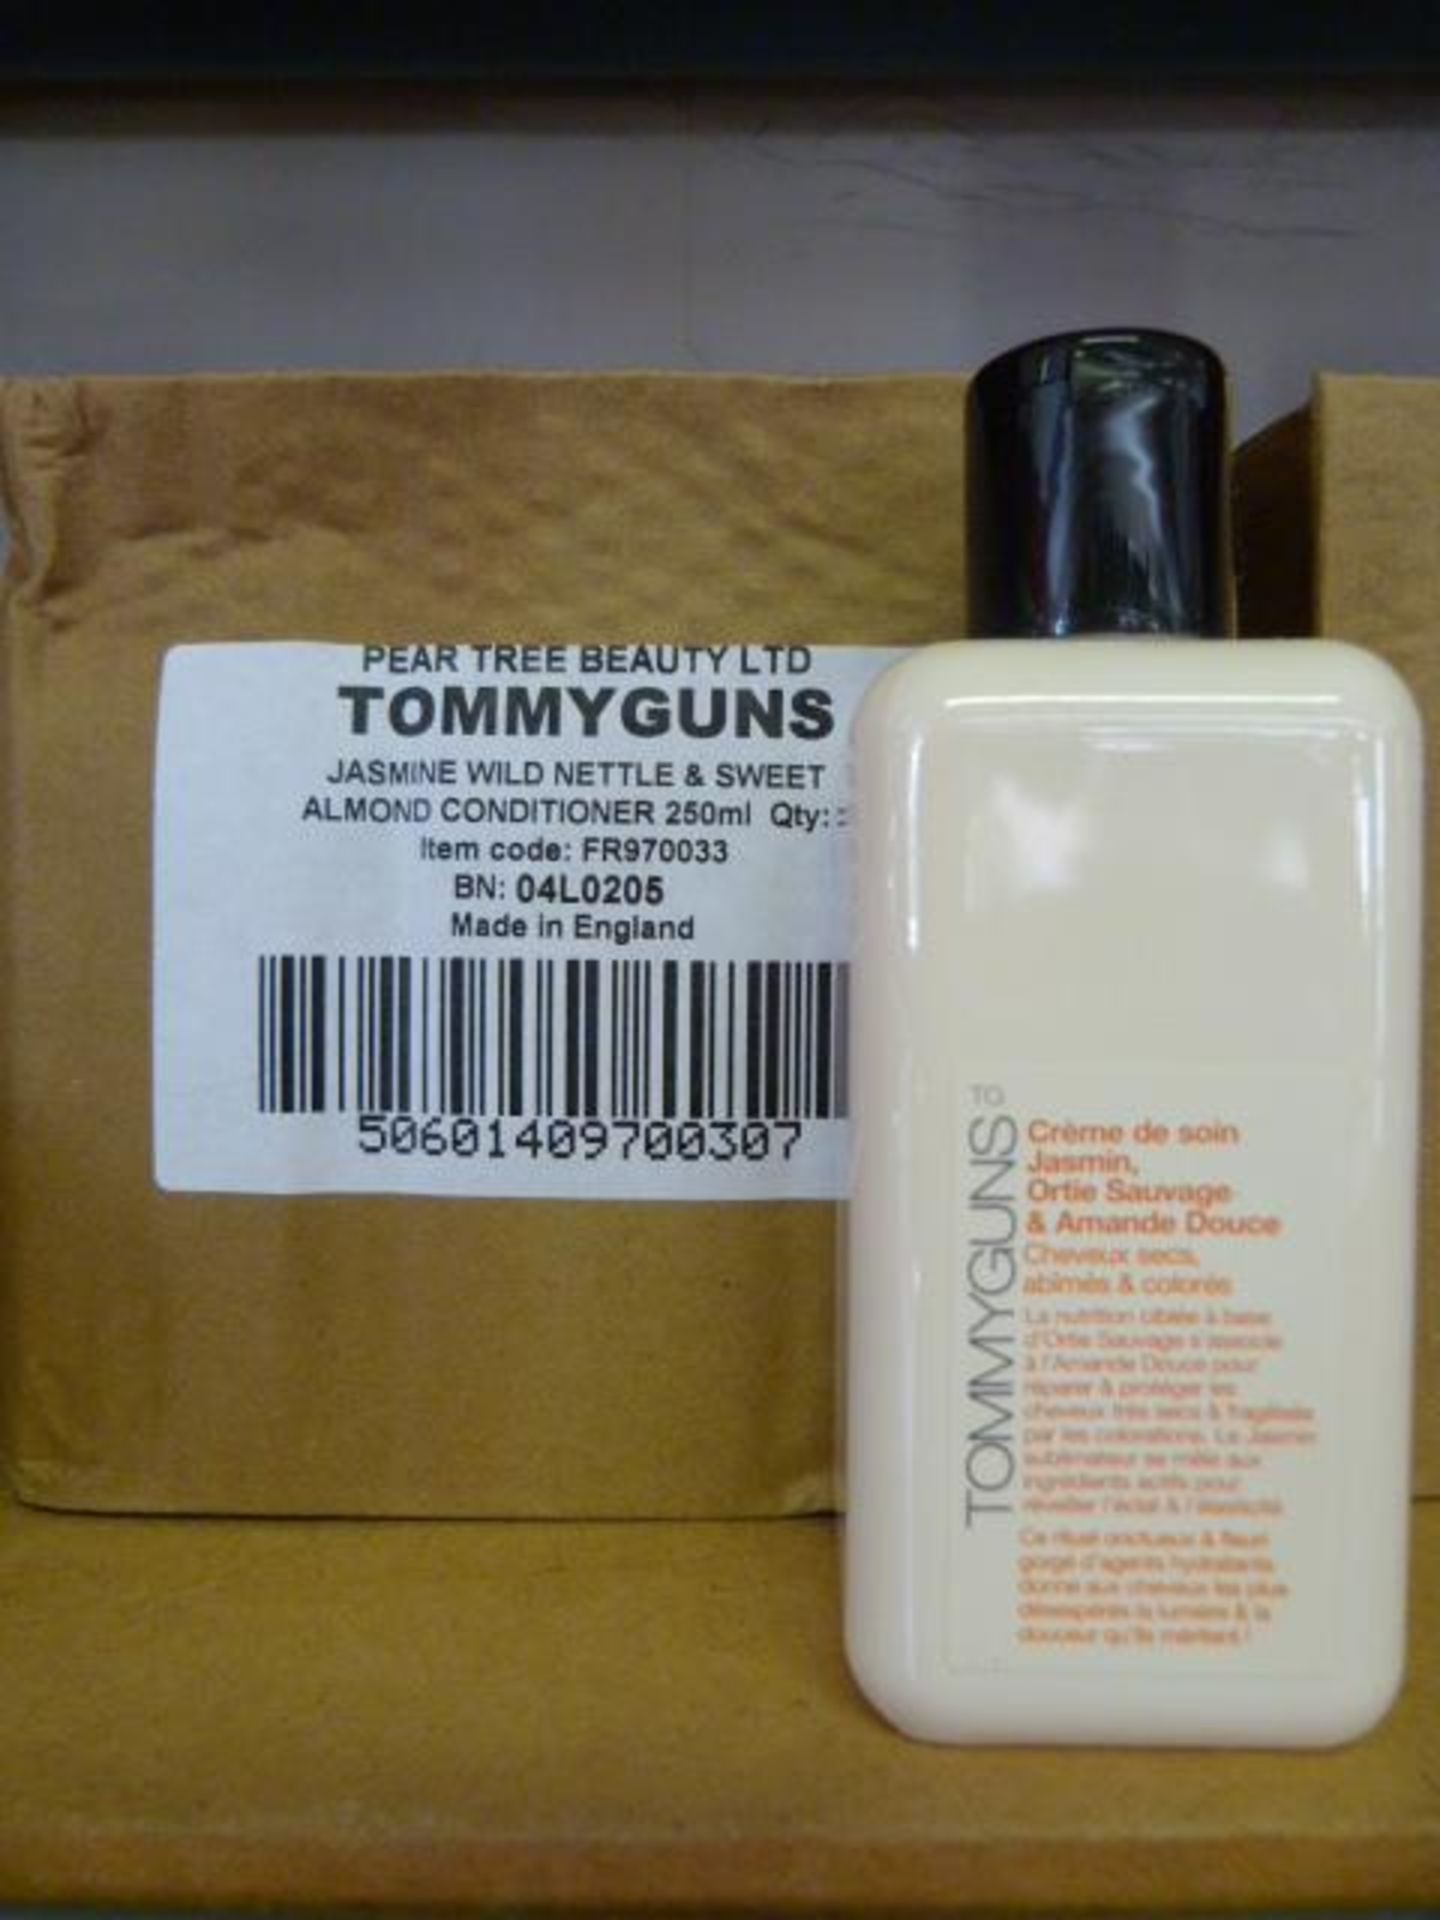 Six 250ml Bottles of Tommyguns Jasmine, Wild Nettle & Sweet Almond Conditioner (RRP £3.95 Per